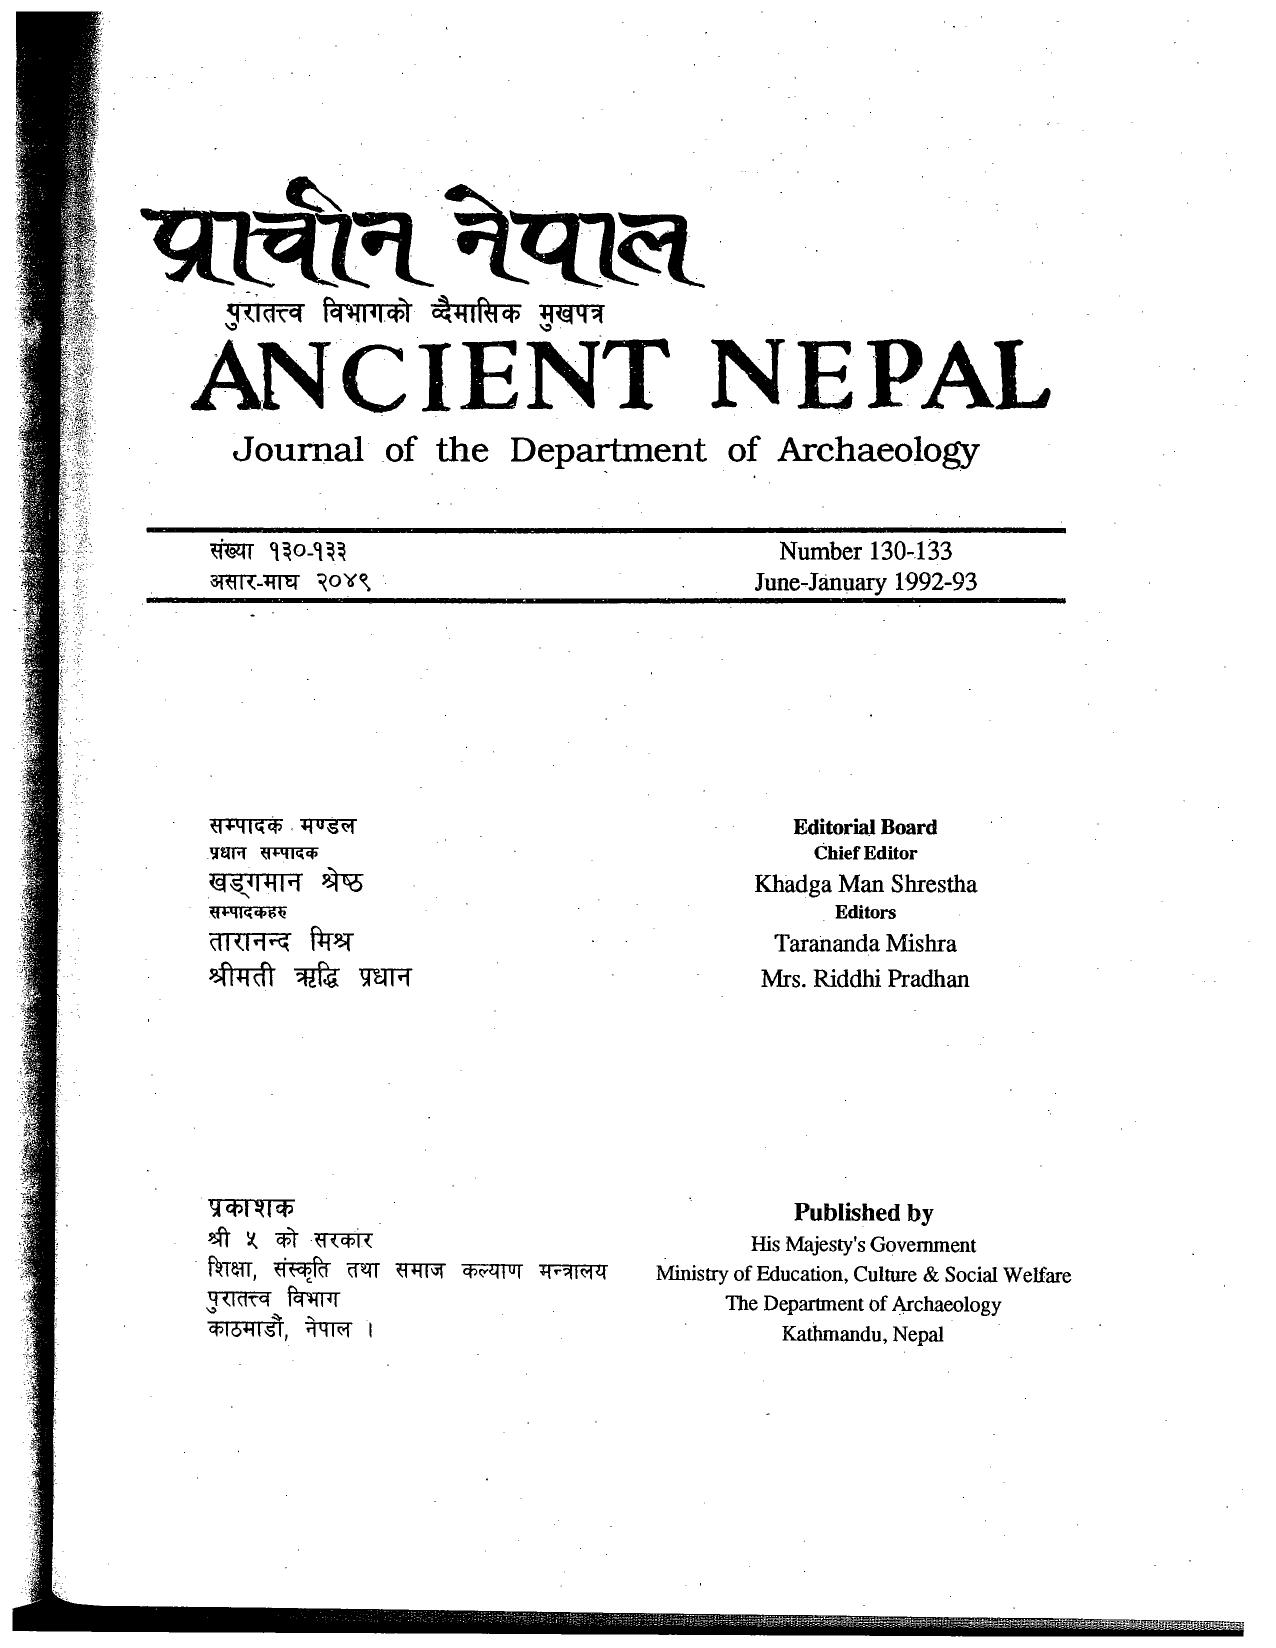 Ancient Nepal 130-133